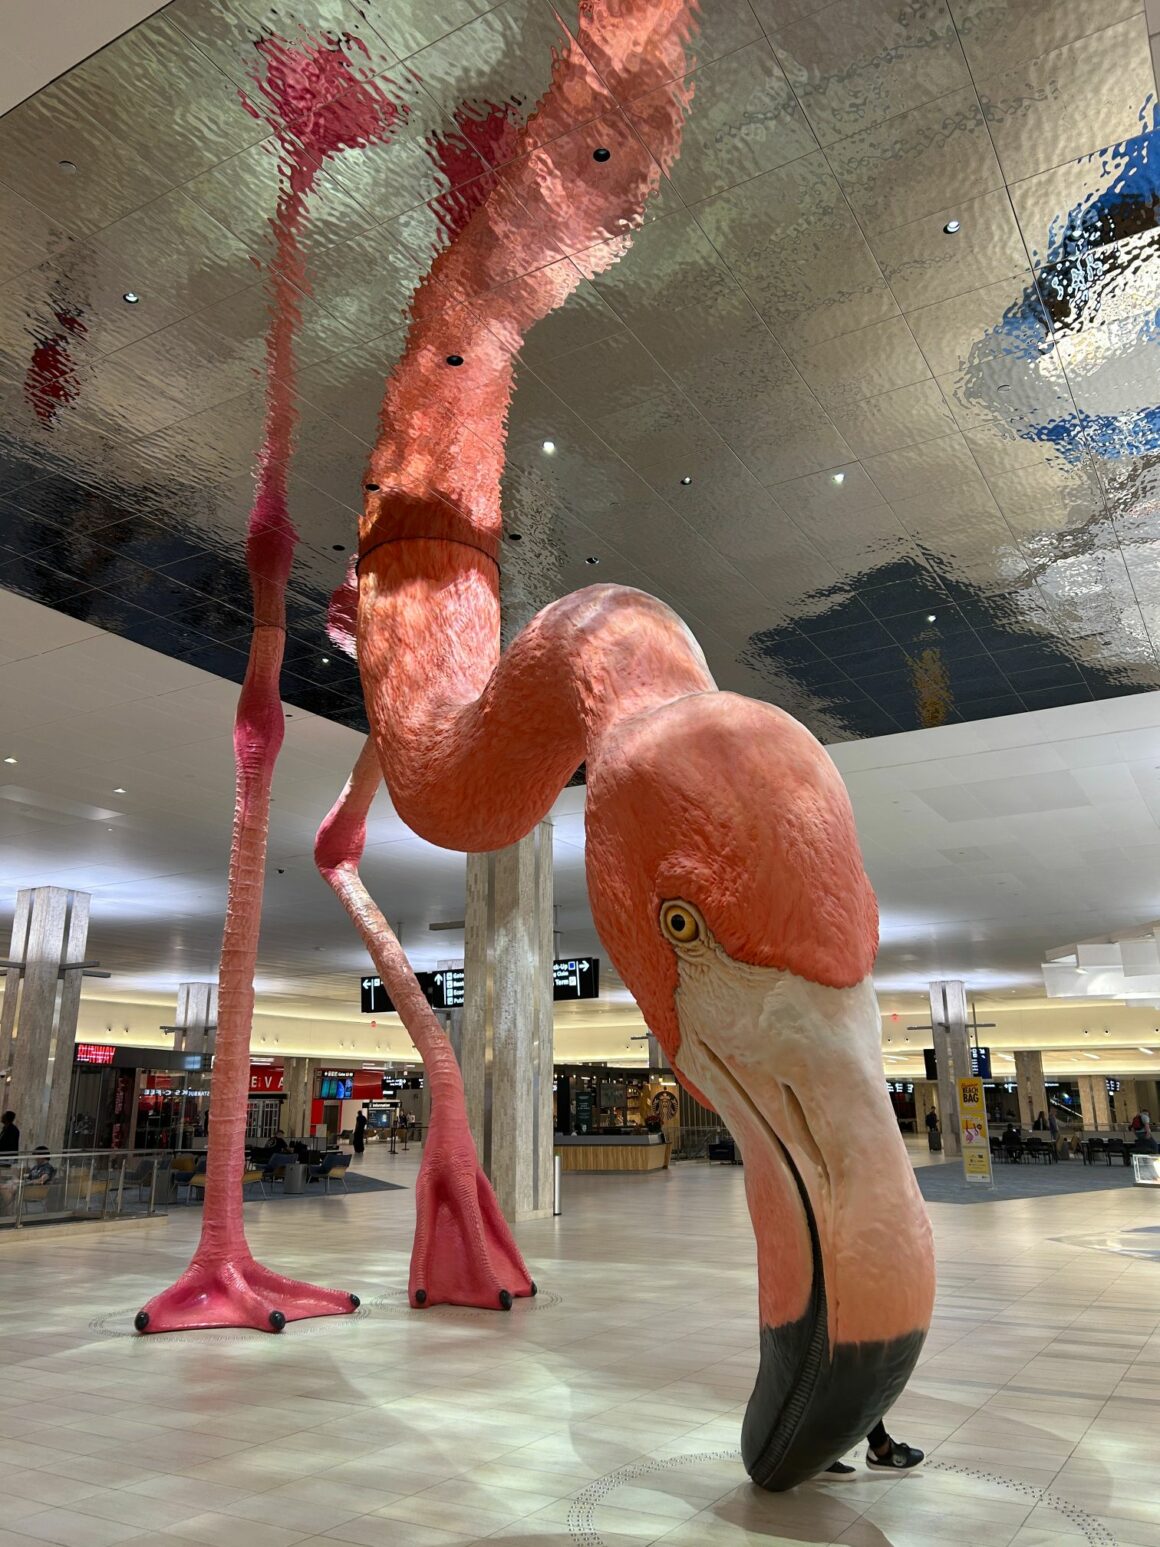 Flamingo sculpture in Tampa airport